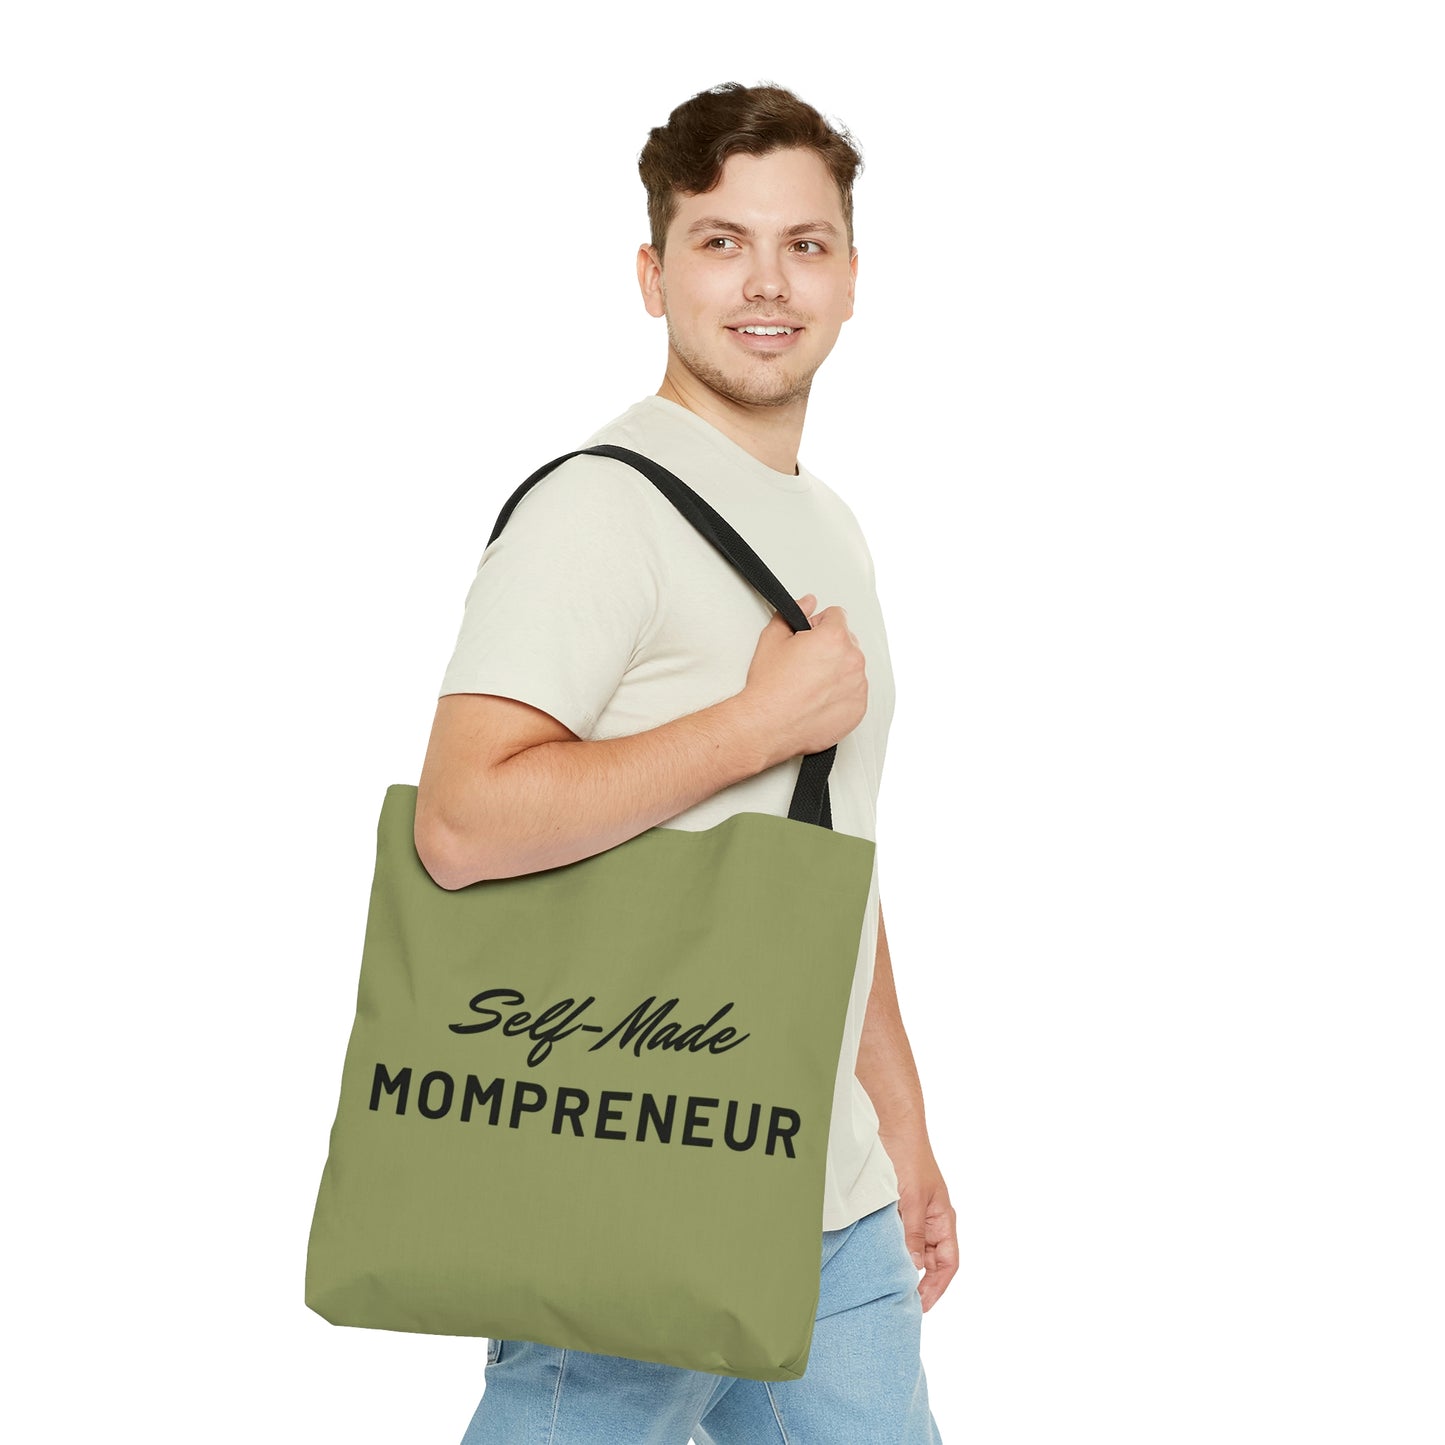 Self-Made Mompreneur (Golden Grass) Tote Bag